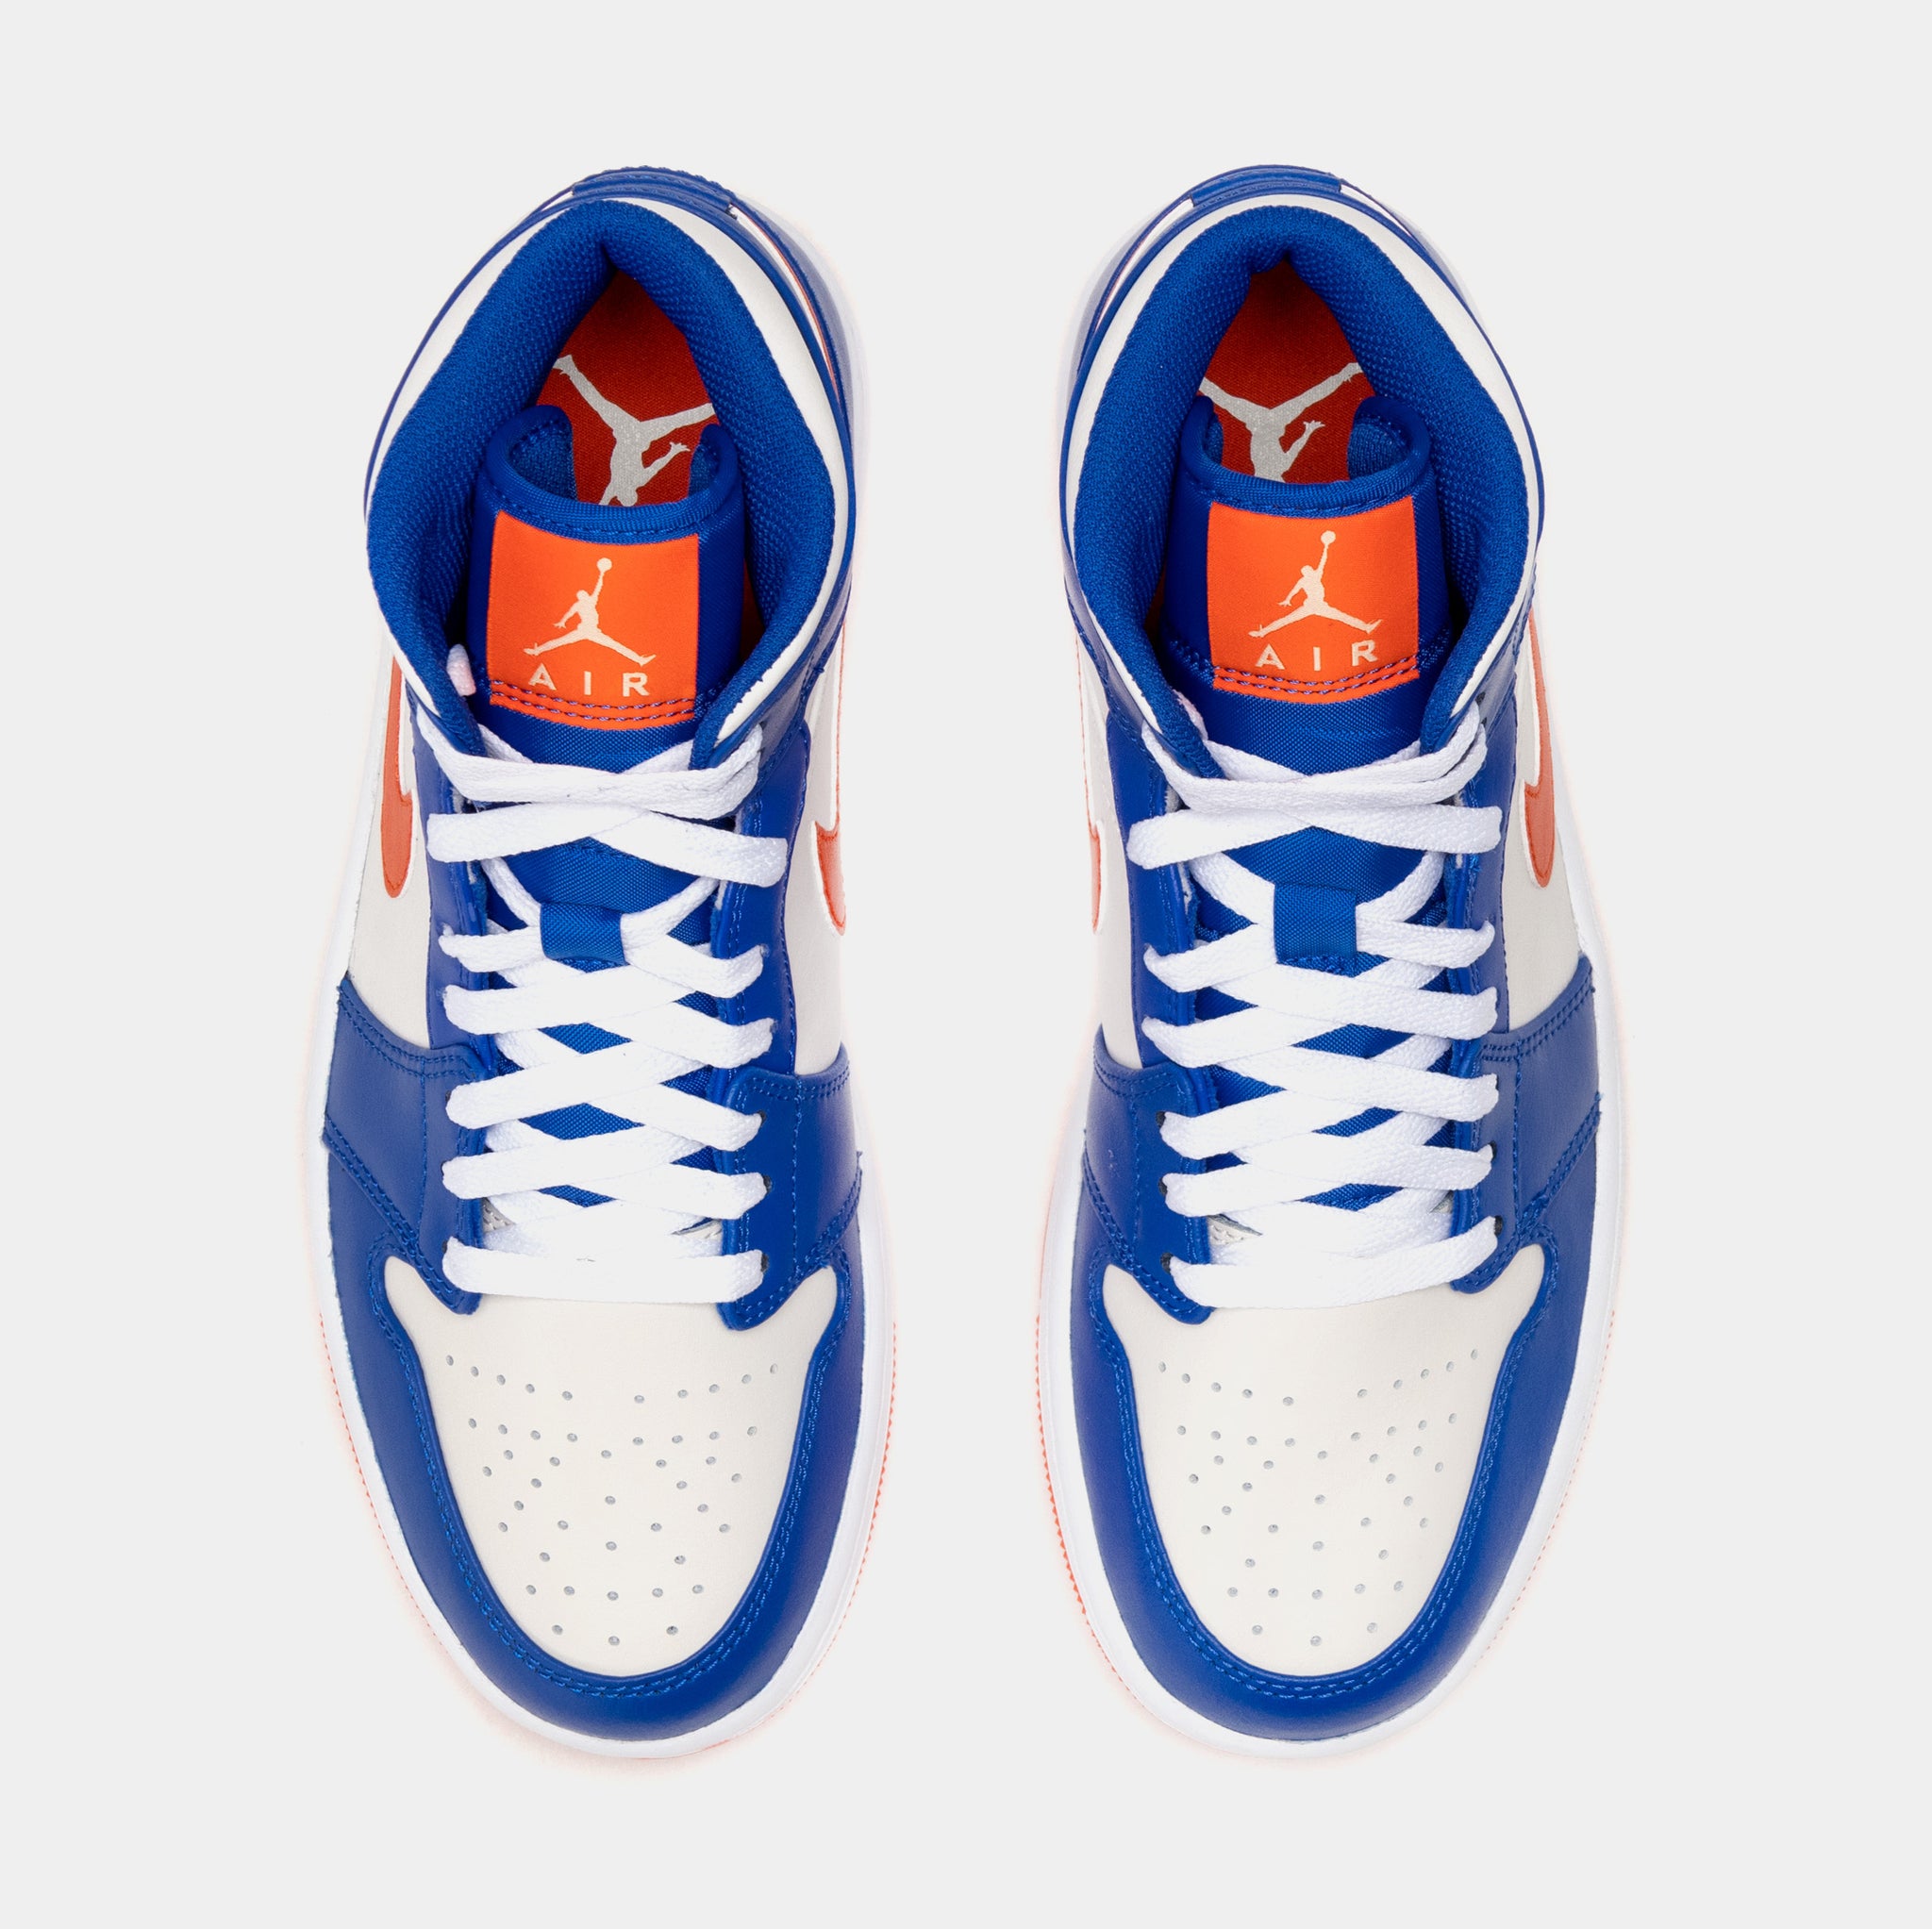 Jordan Air Jordan 1 Retro Mid Mens Basketball Shoes Blue Orange